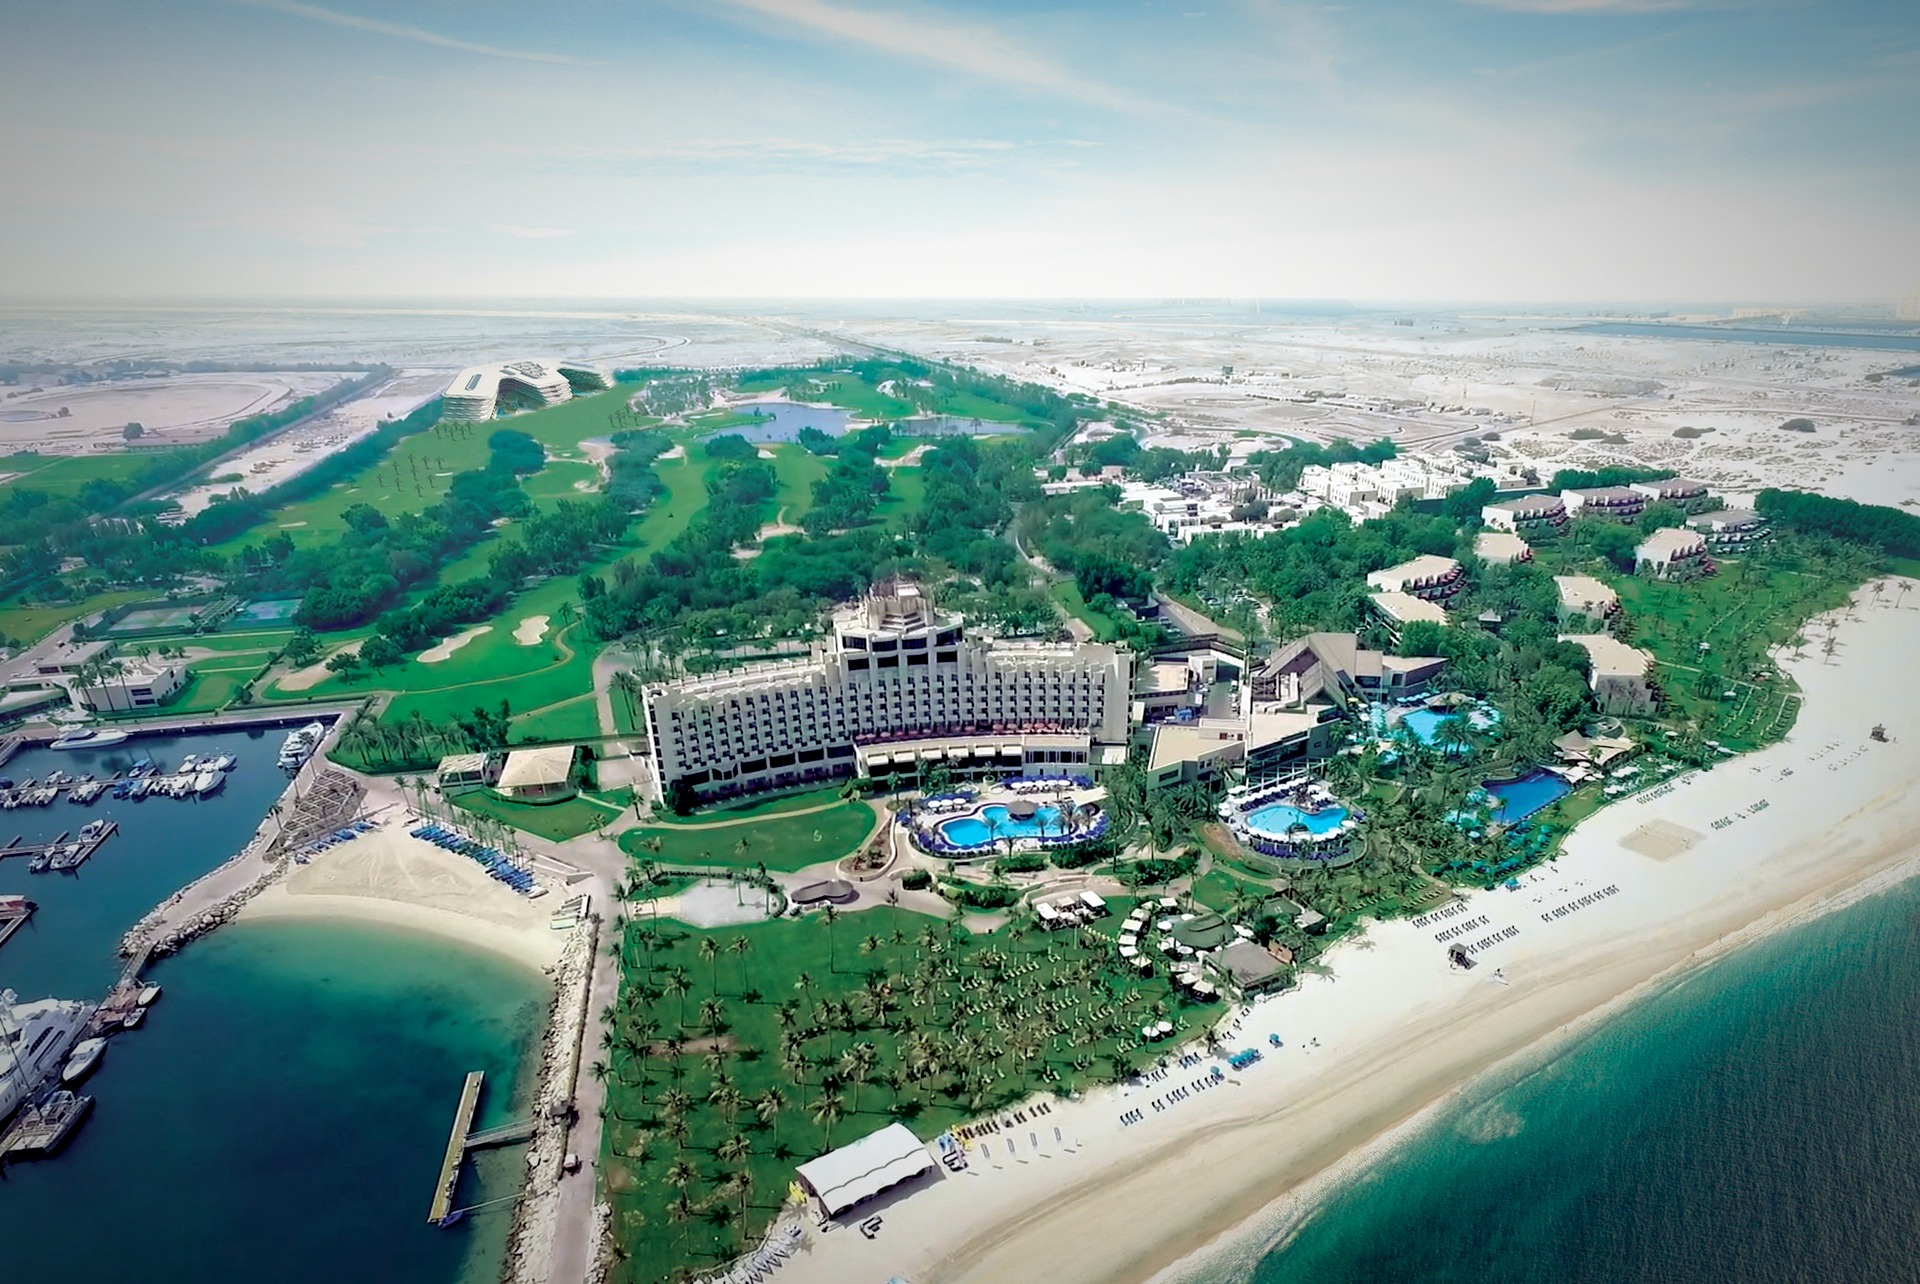 JA Lake View Hotel Dubai voice-enables each guestroom 